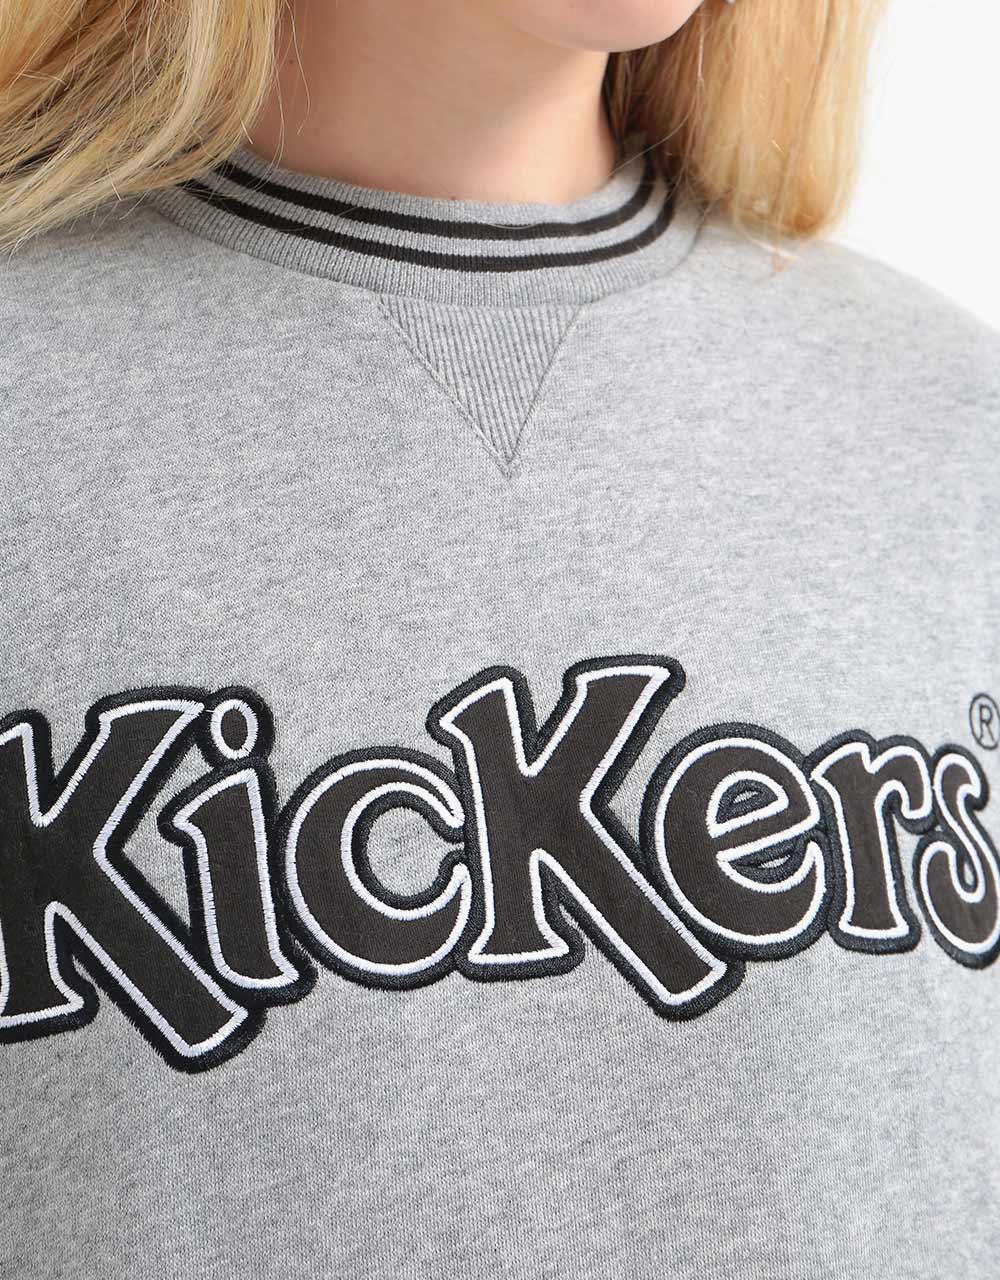 Kickers® Womens Sweatshirt - Grey Marl